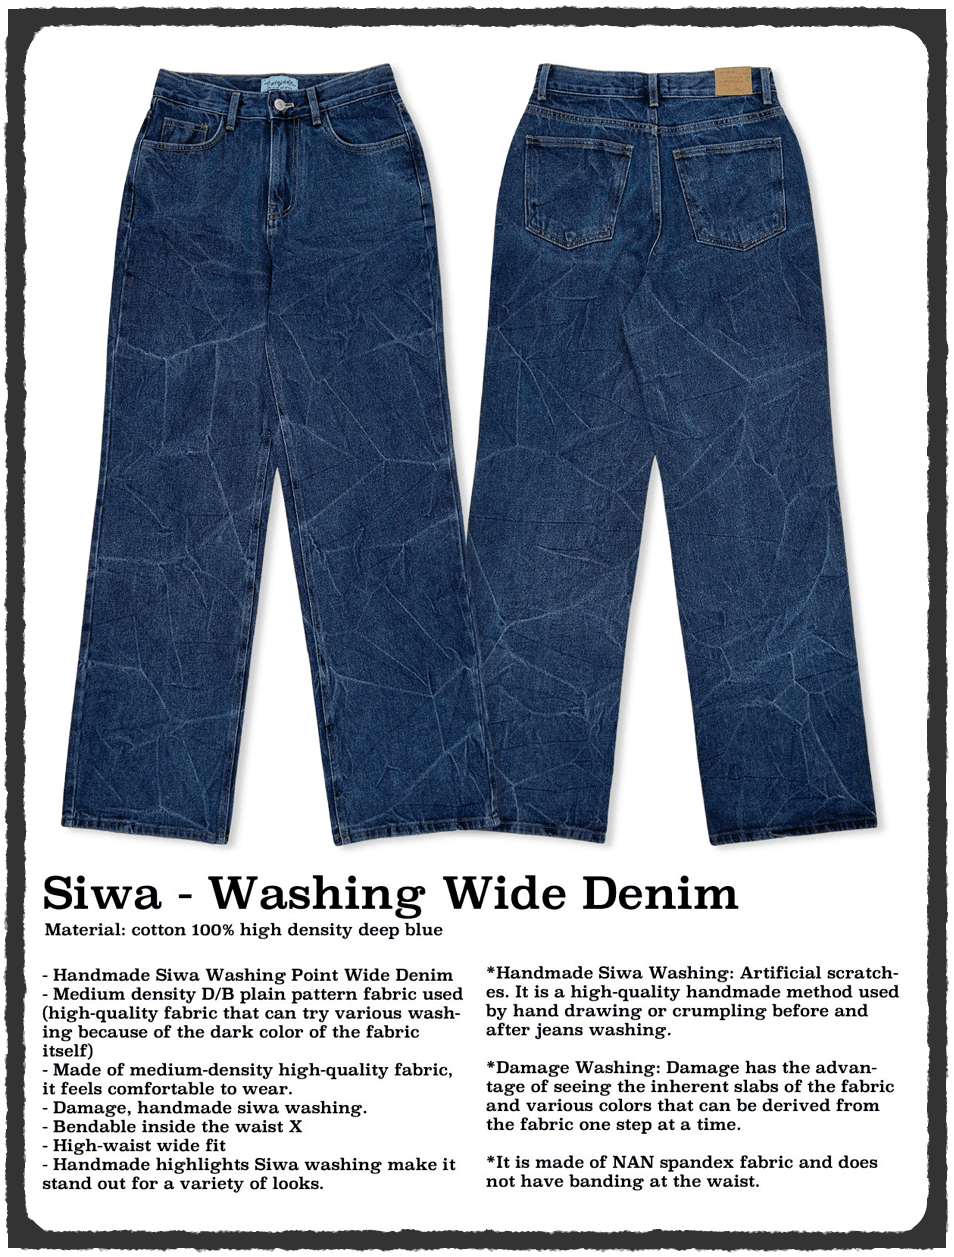 Siwa - Washing Wide Denim